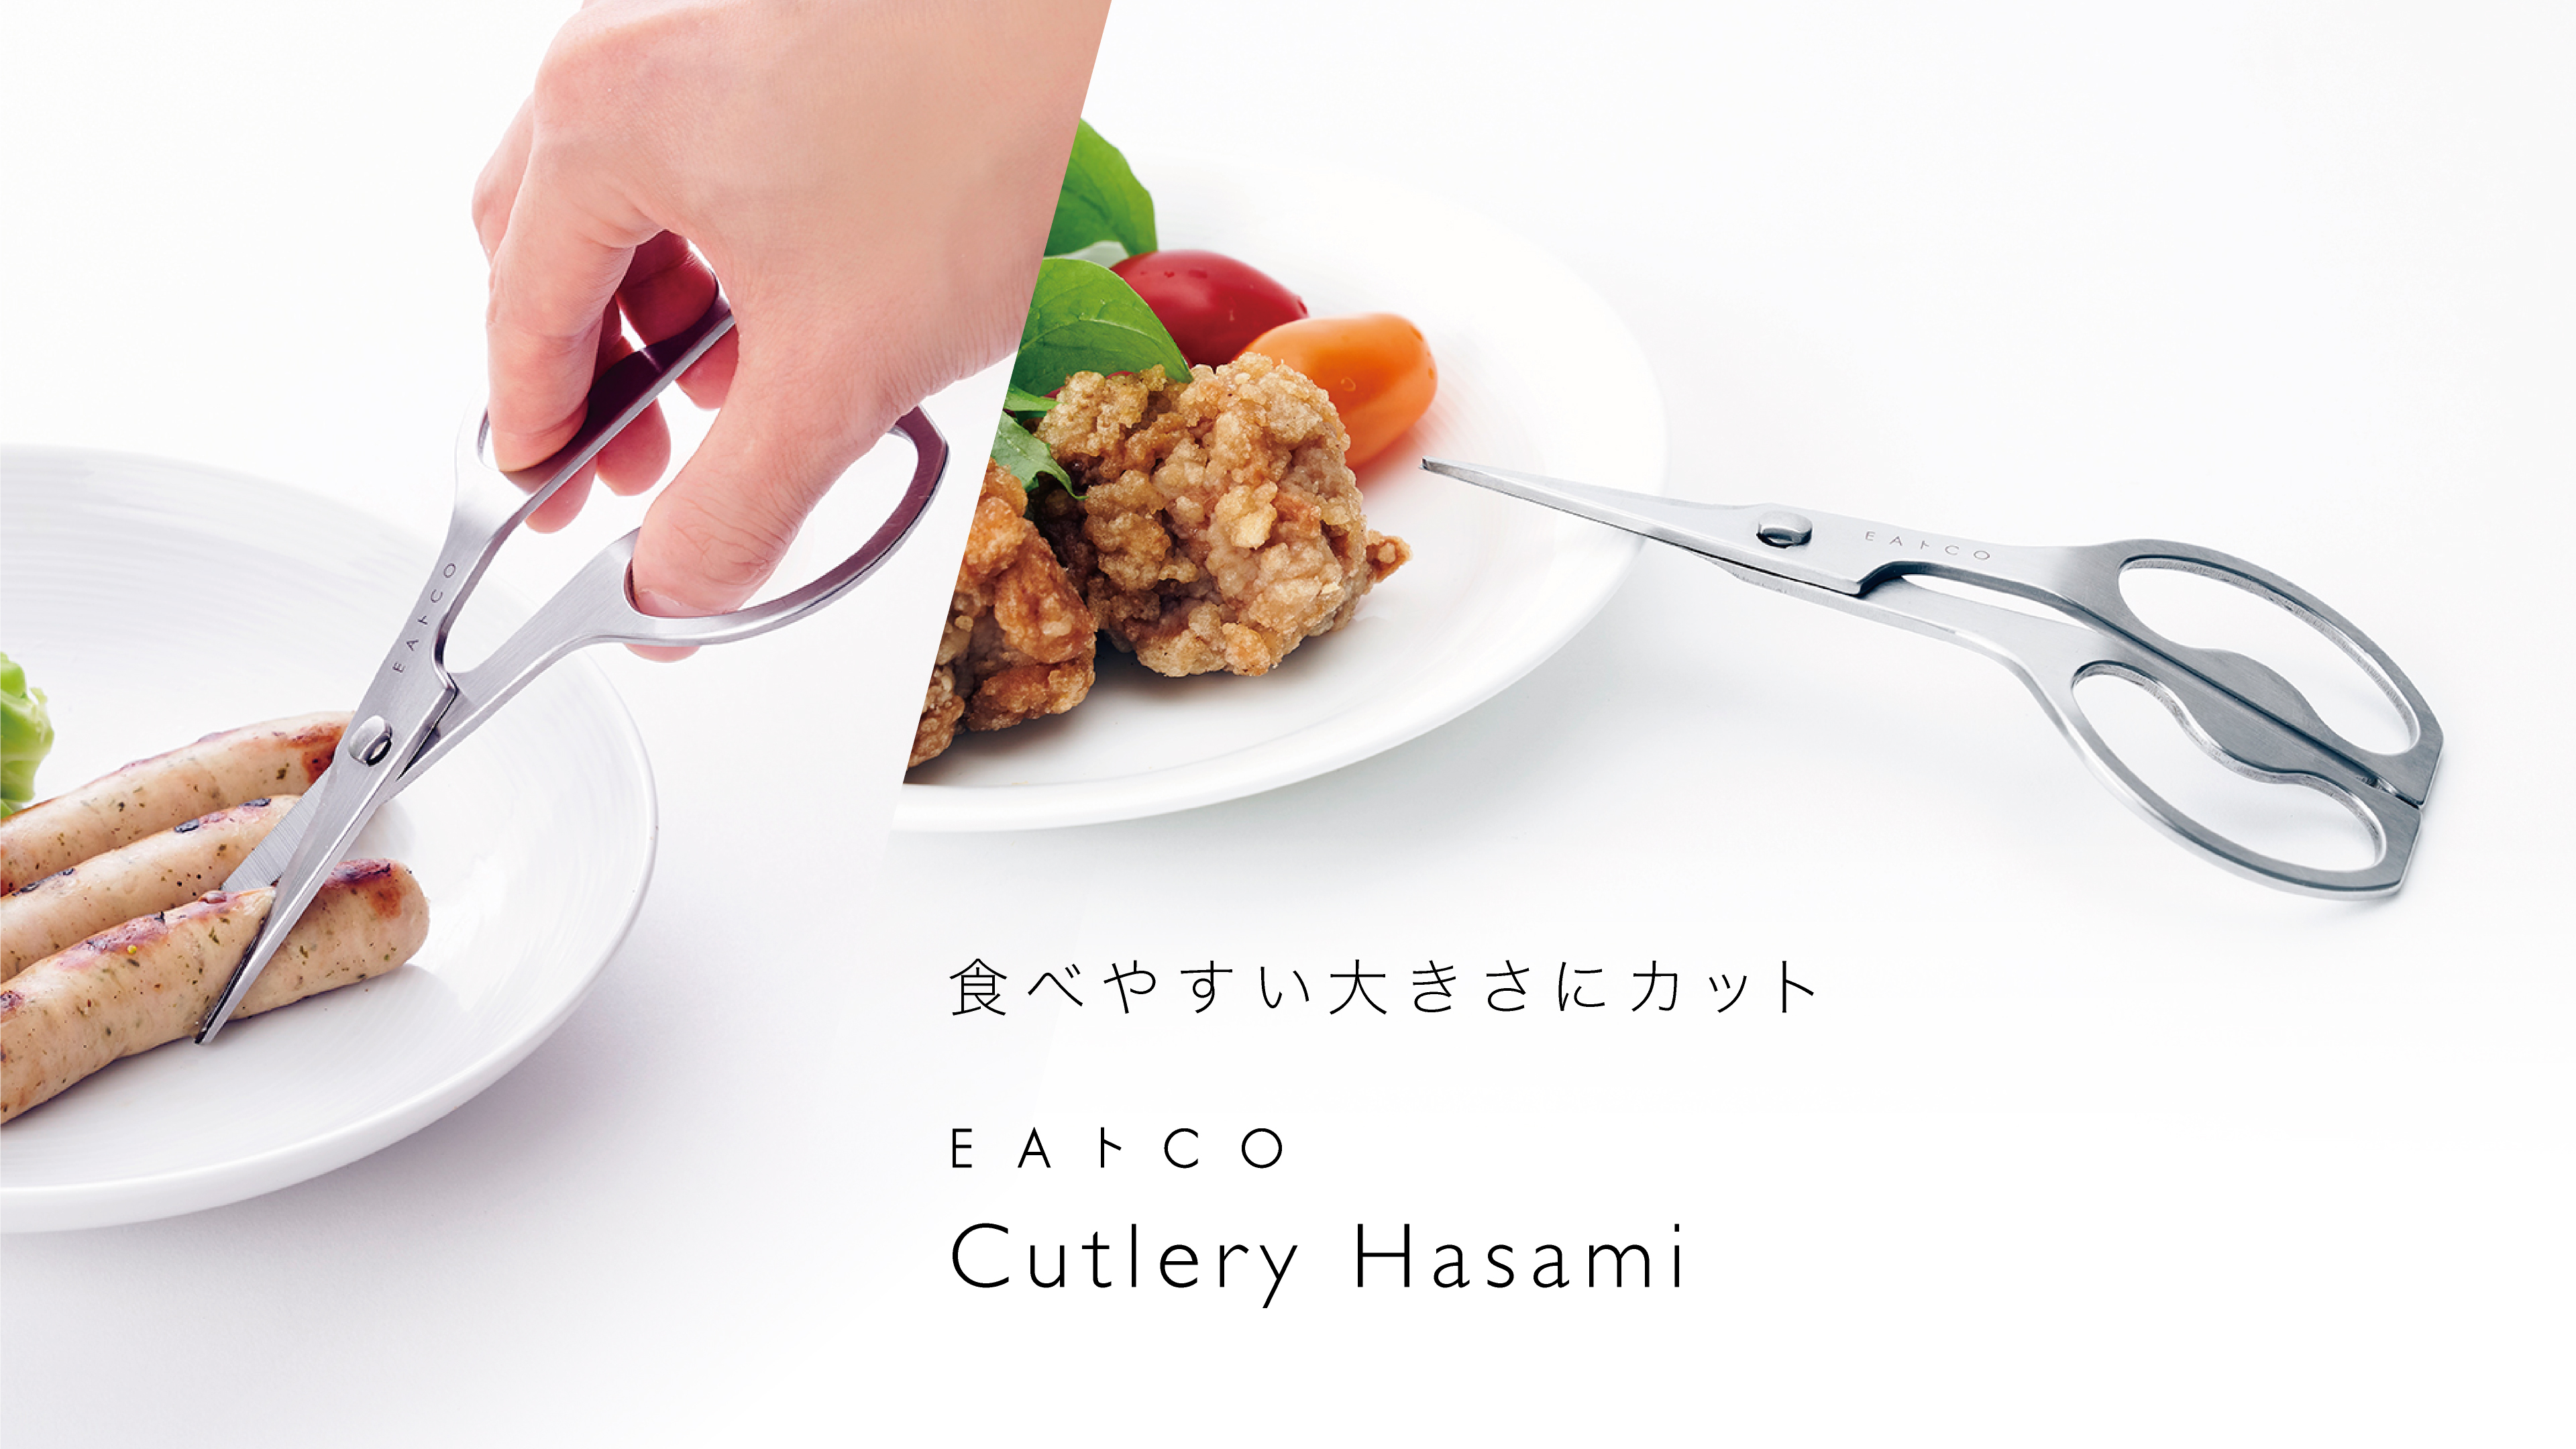 EAトCO Cutlery Hasami